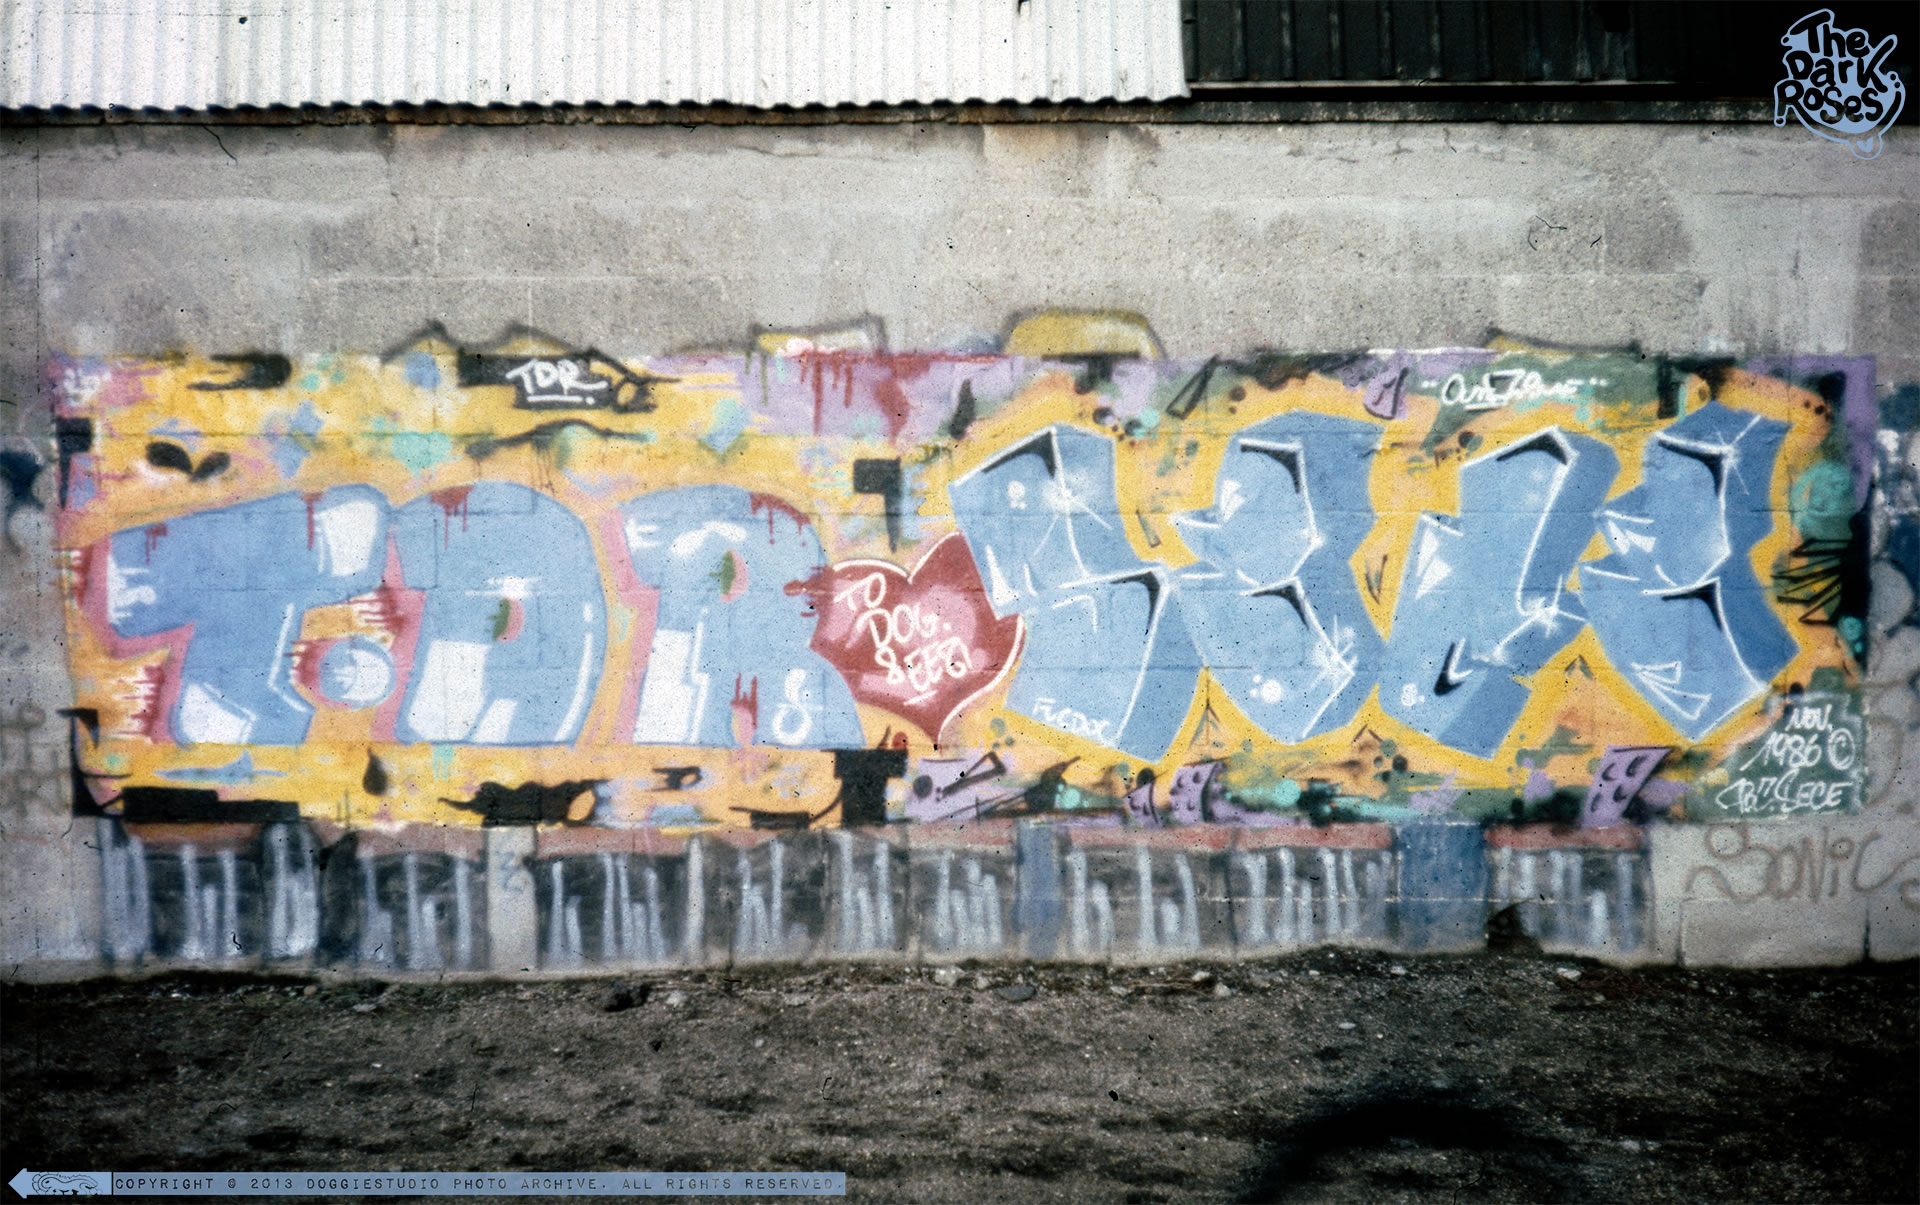 ★ TDR SECE ★ by Sece - The Dark Roses - Ellebjerg, Copenhagen, Denmark 1986